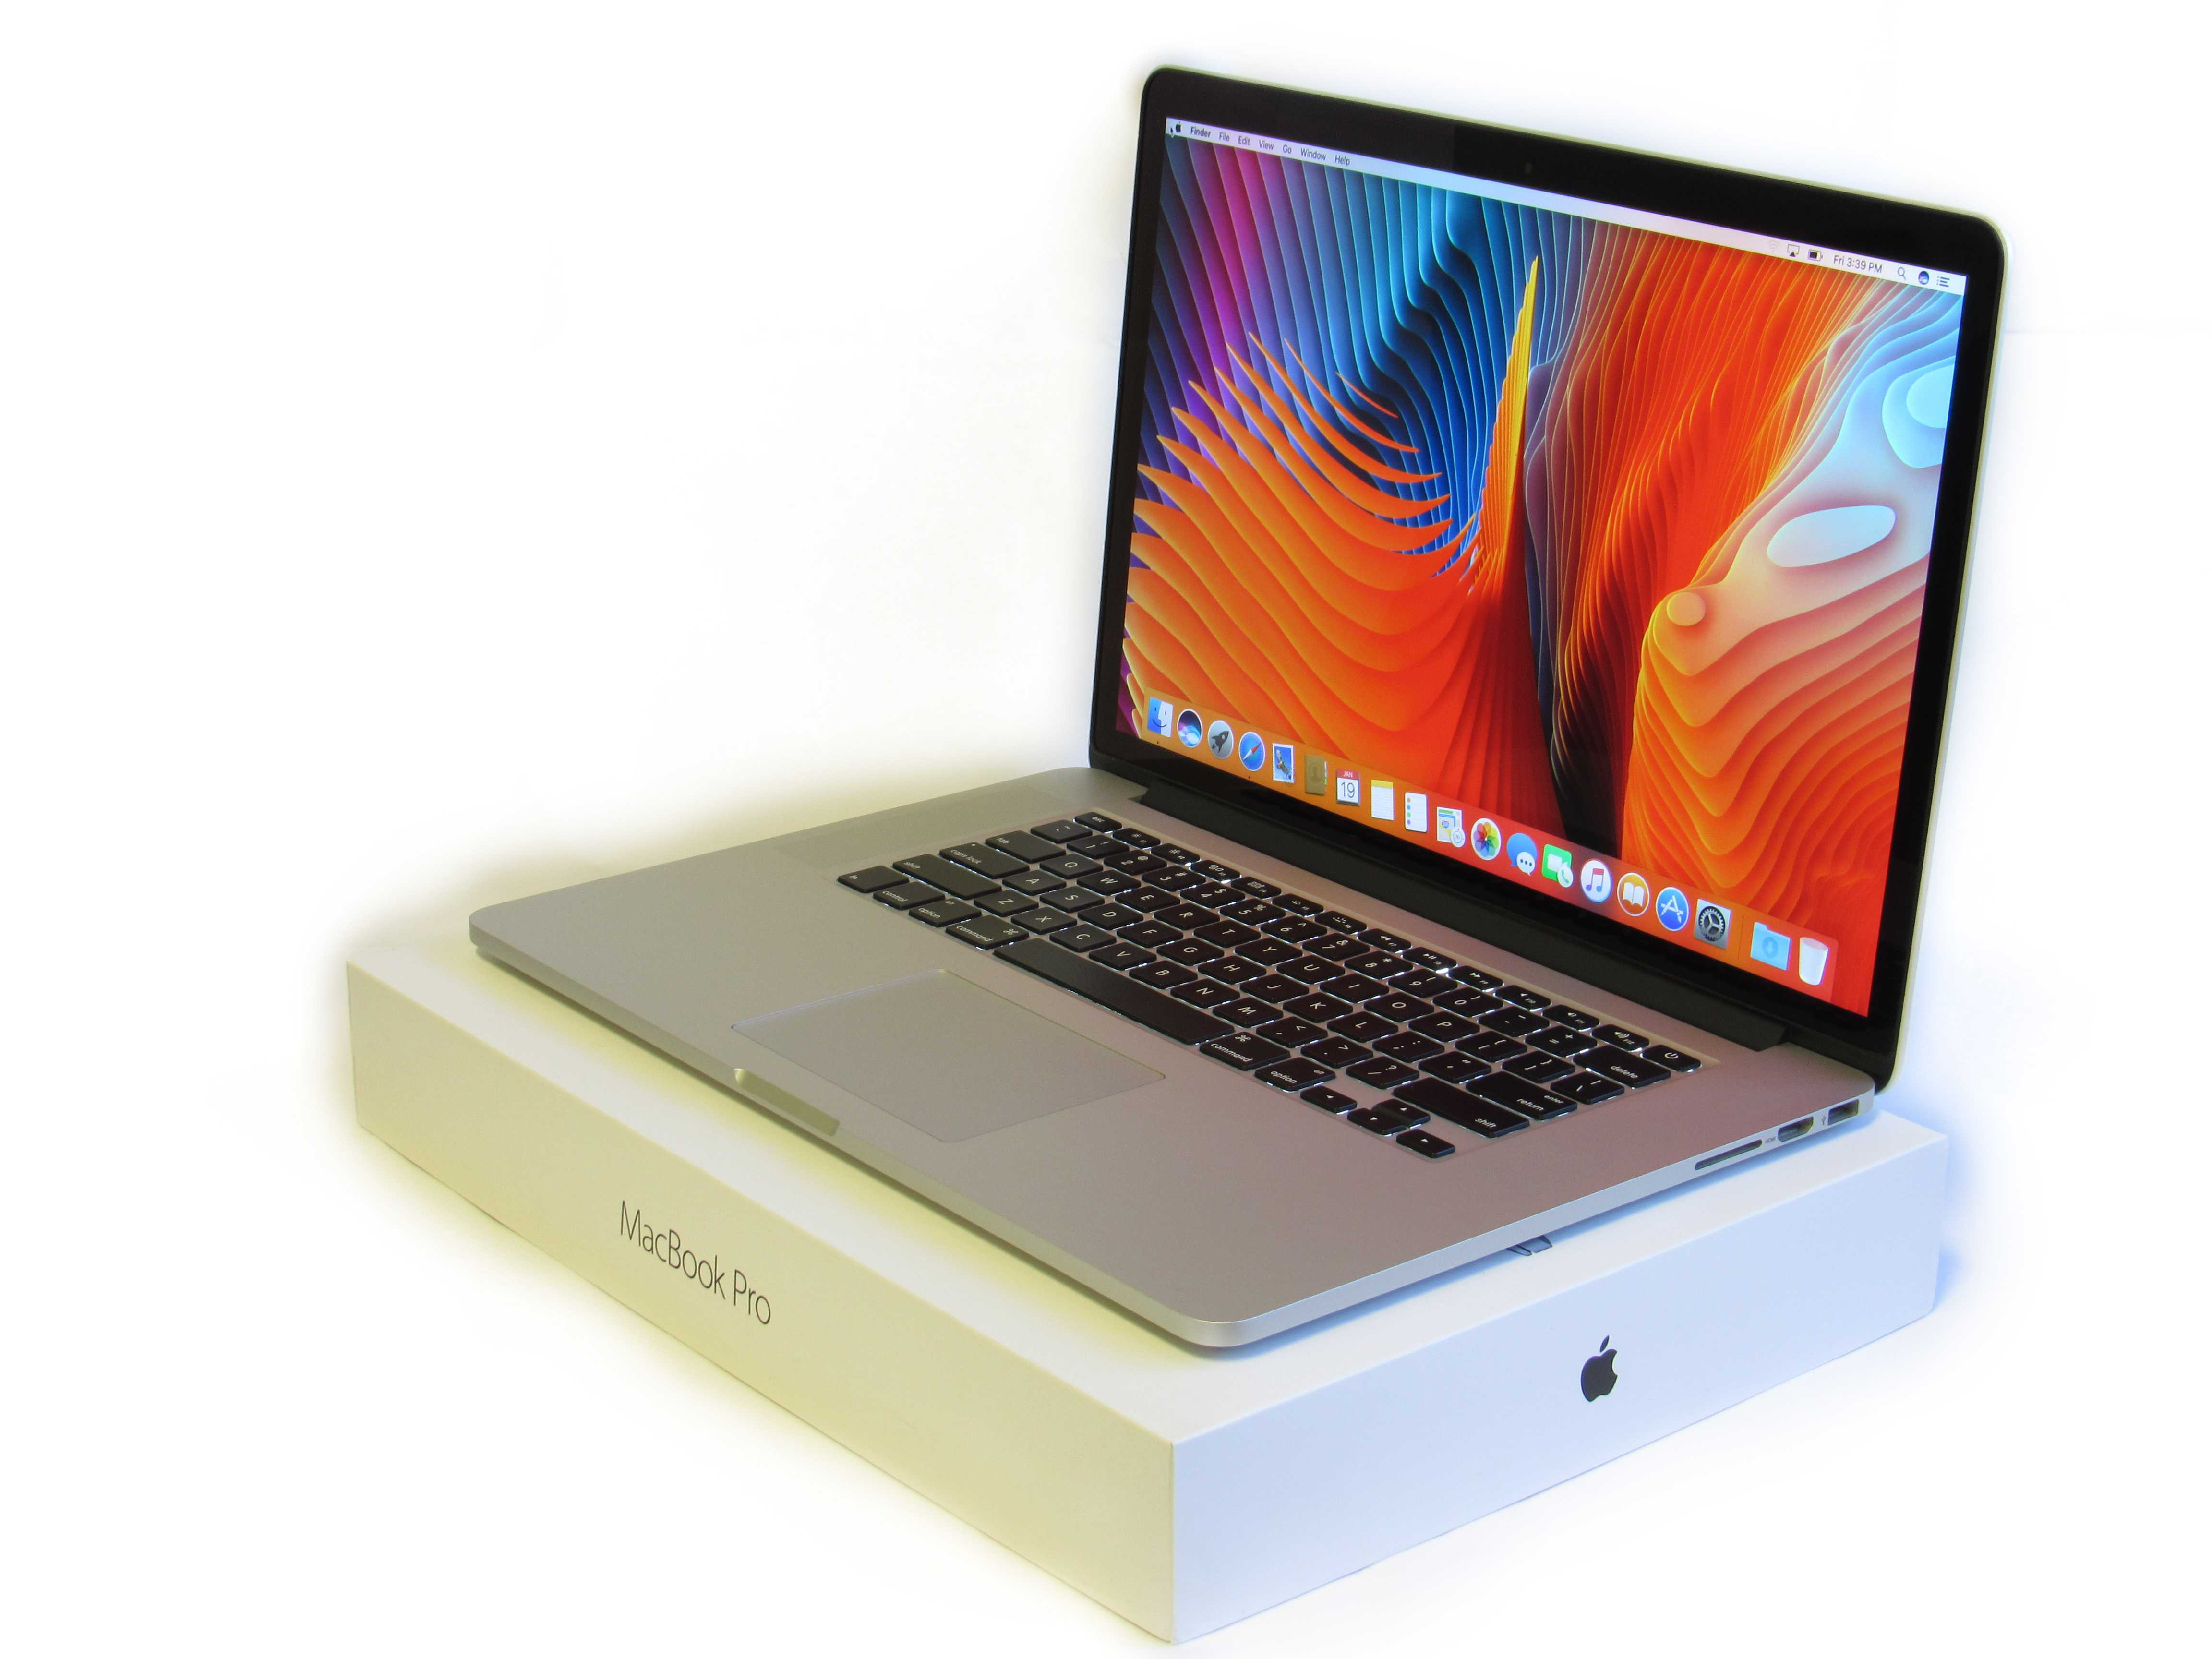 Pre-Owned Apple MacBook Pro 15-Inch Retina Laptop i7 2.5GHz • 16GB DDR3 Ram • 2TB SSD • Radeon R9 M370X 2GB Video • MJLT2LL/A • OS X Mojave (Good) - image 3 of 4